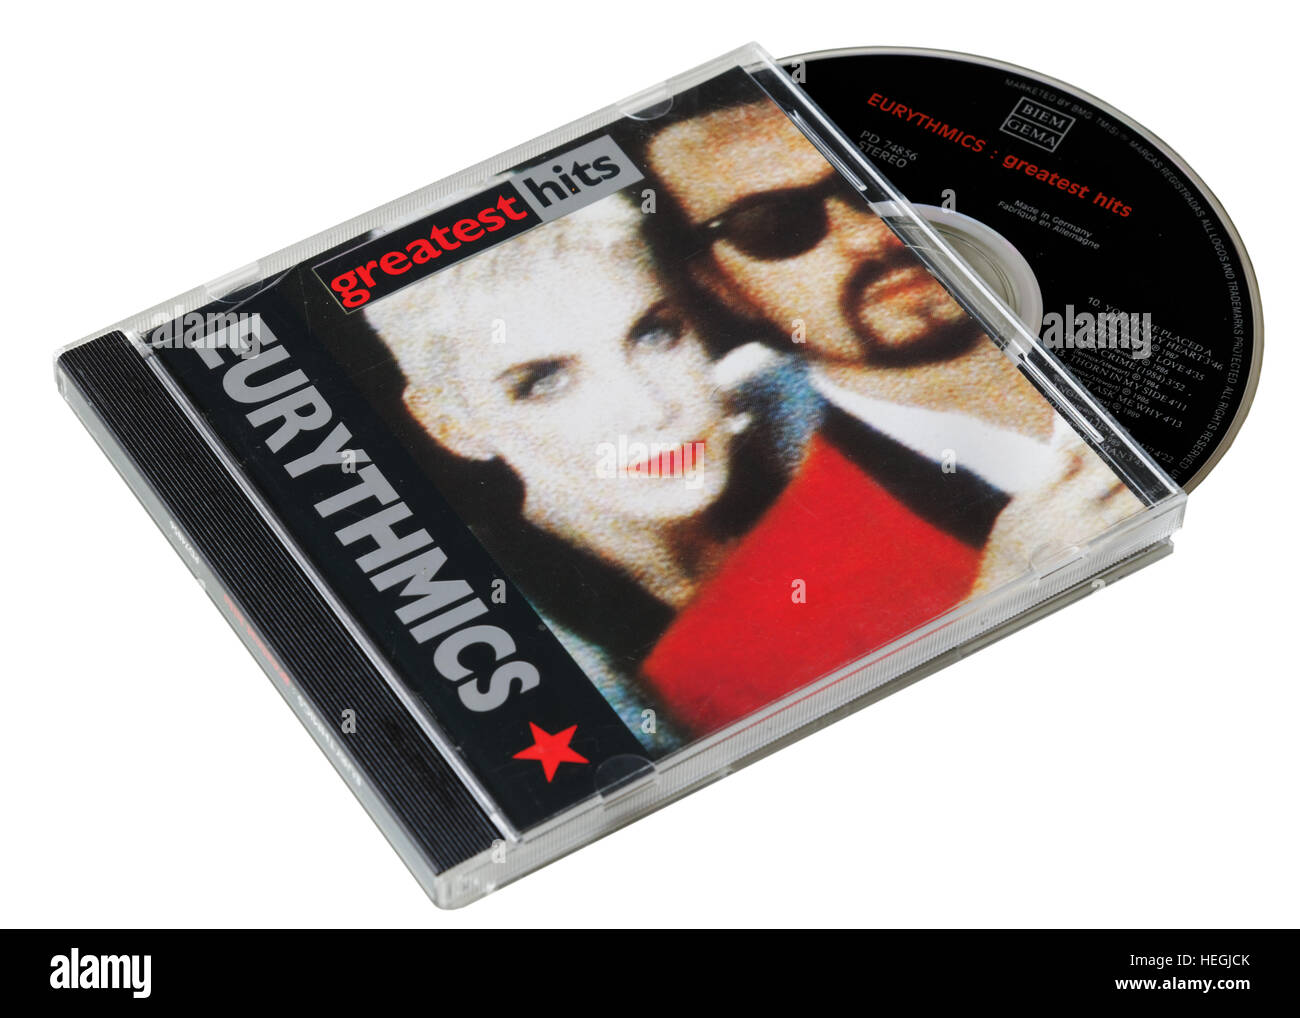 Eurythmics CD Greatest Hits Foto de stock